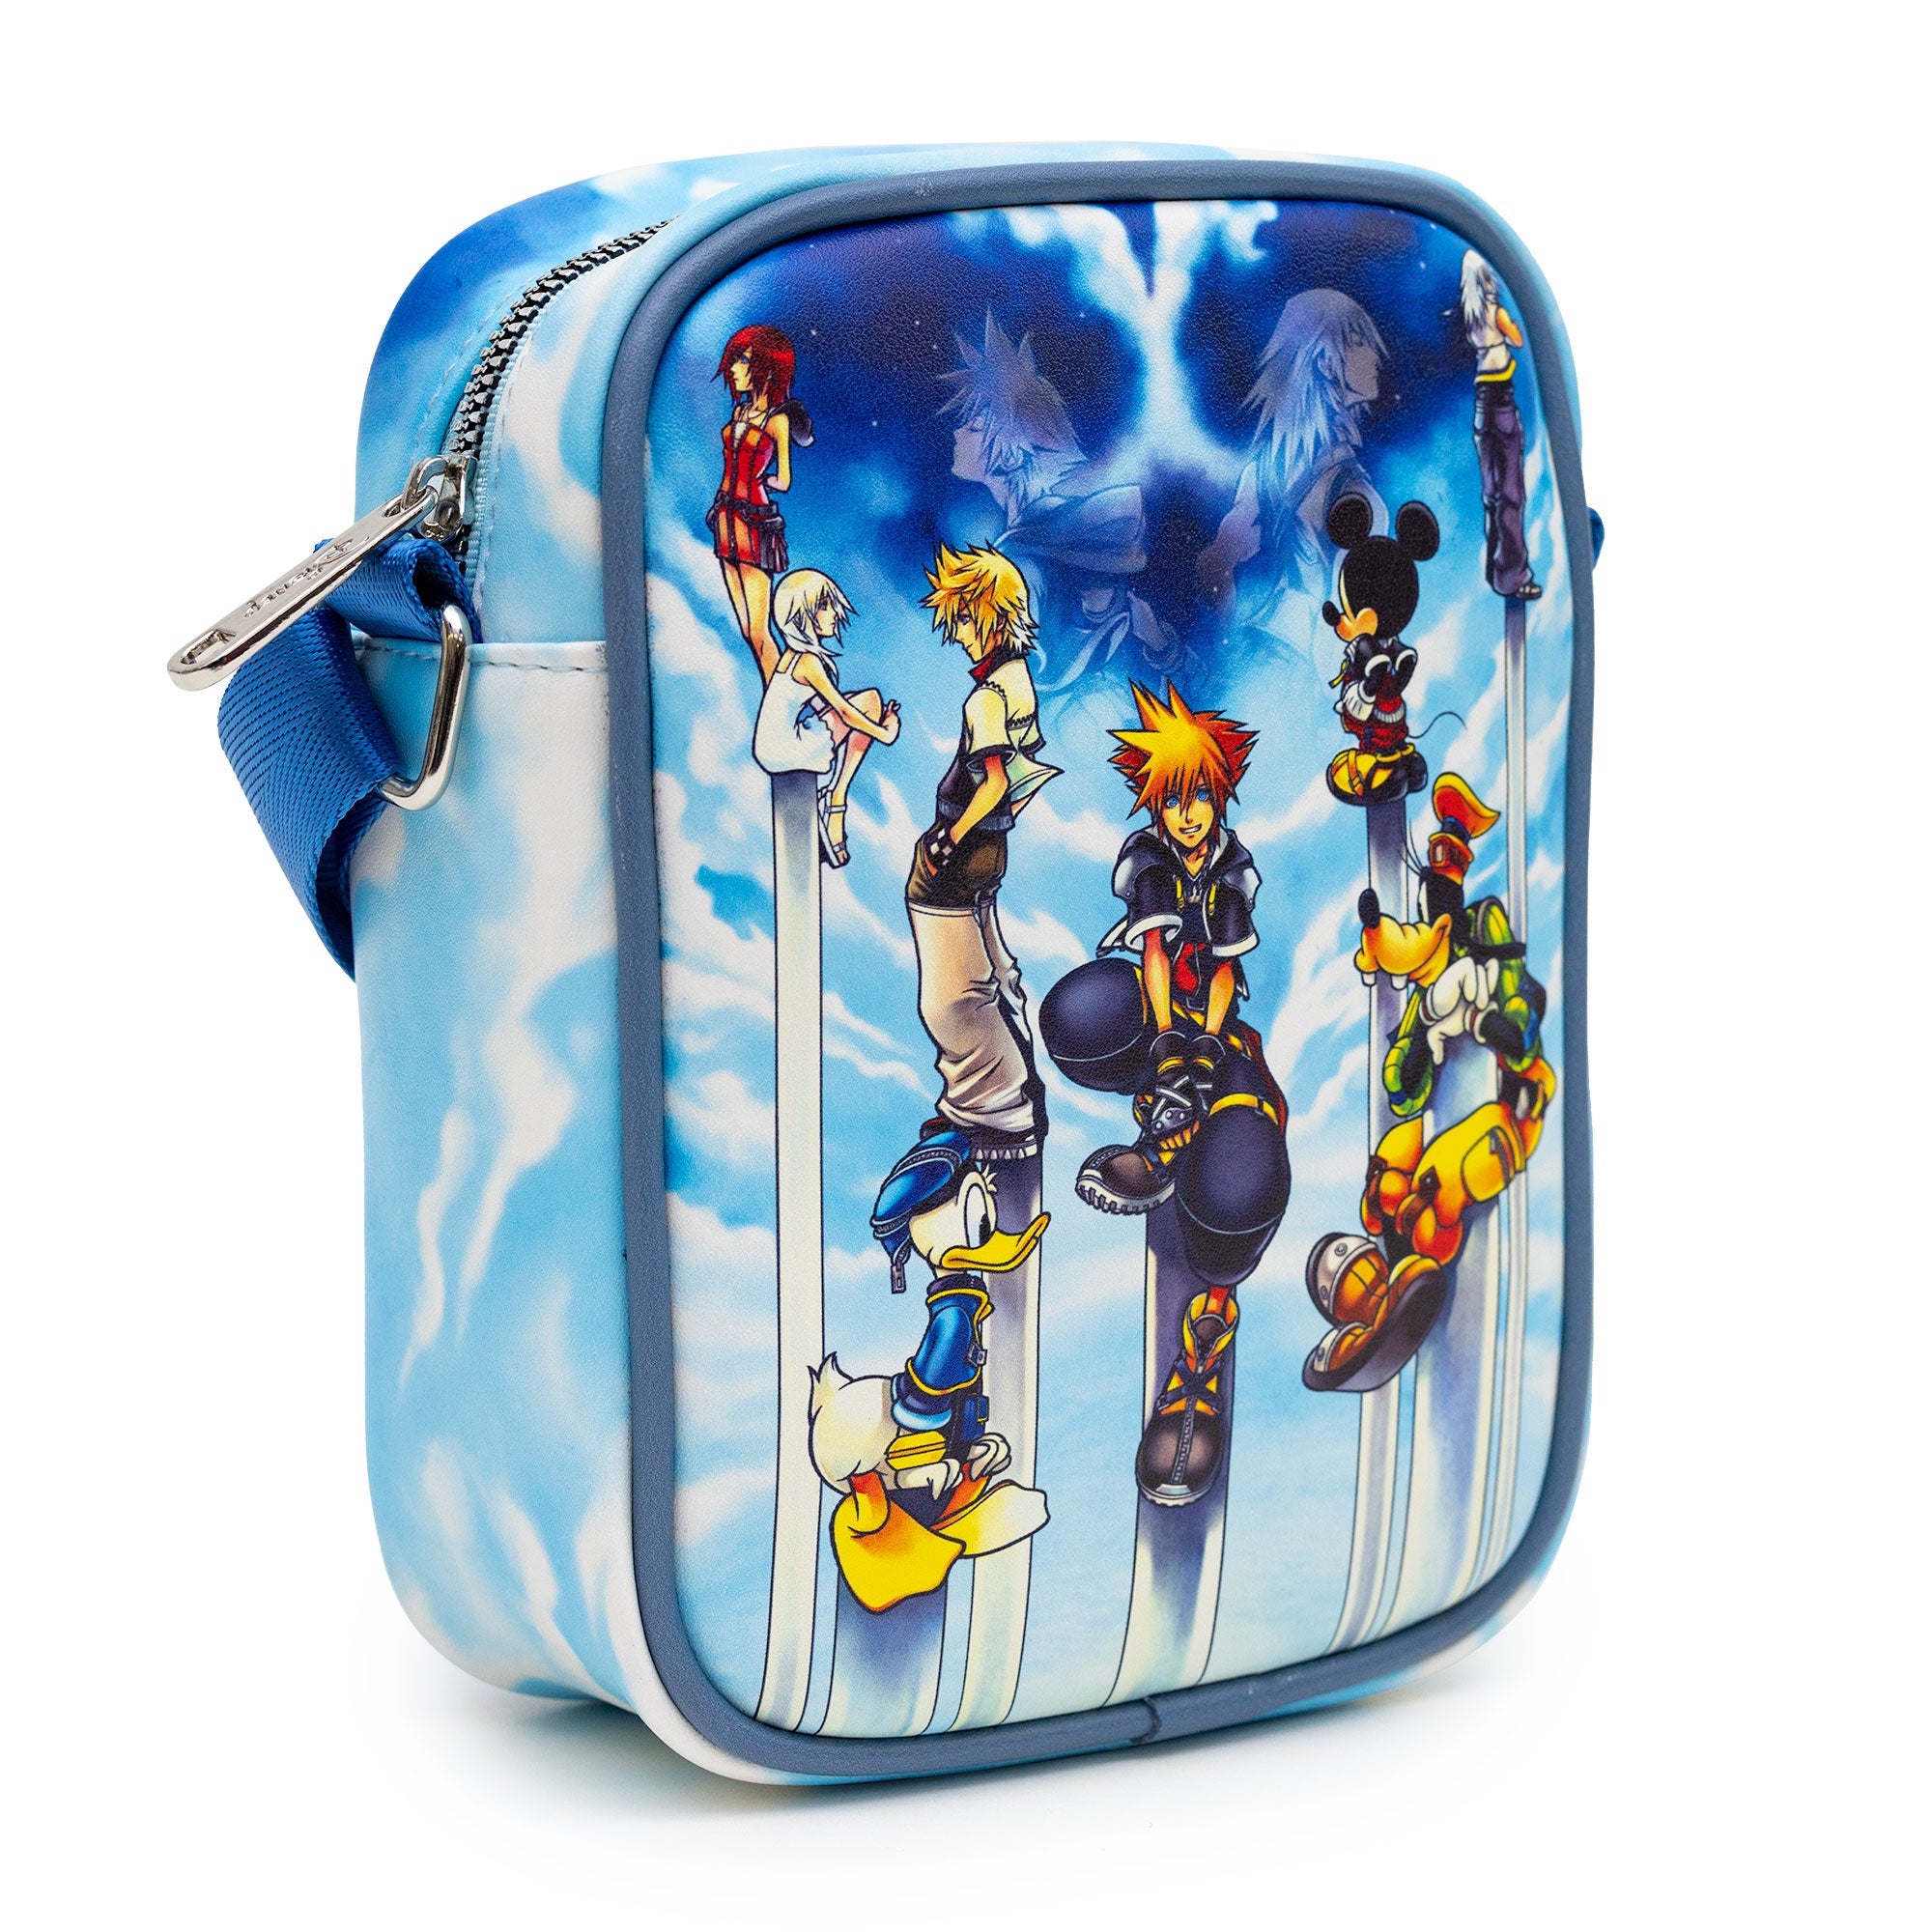 Disney Kingdom Hearts Character Group Crossbody Bag